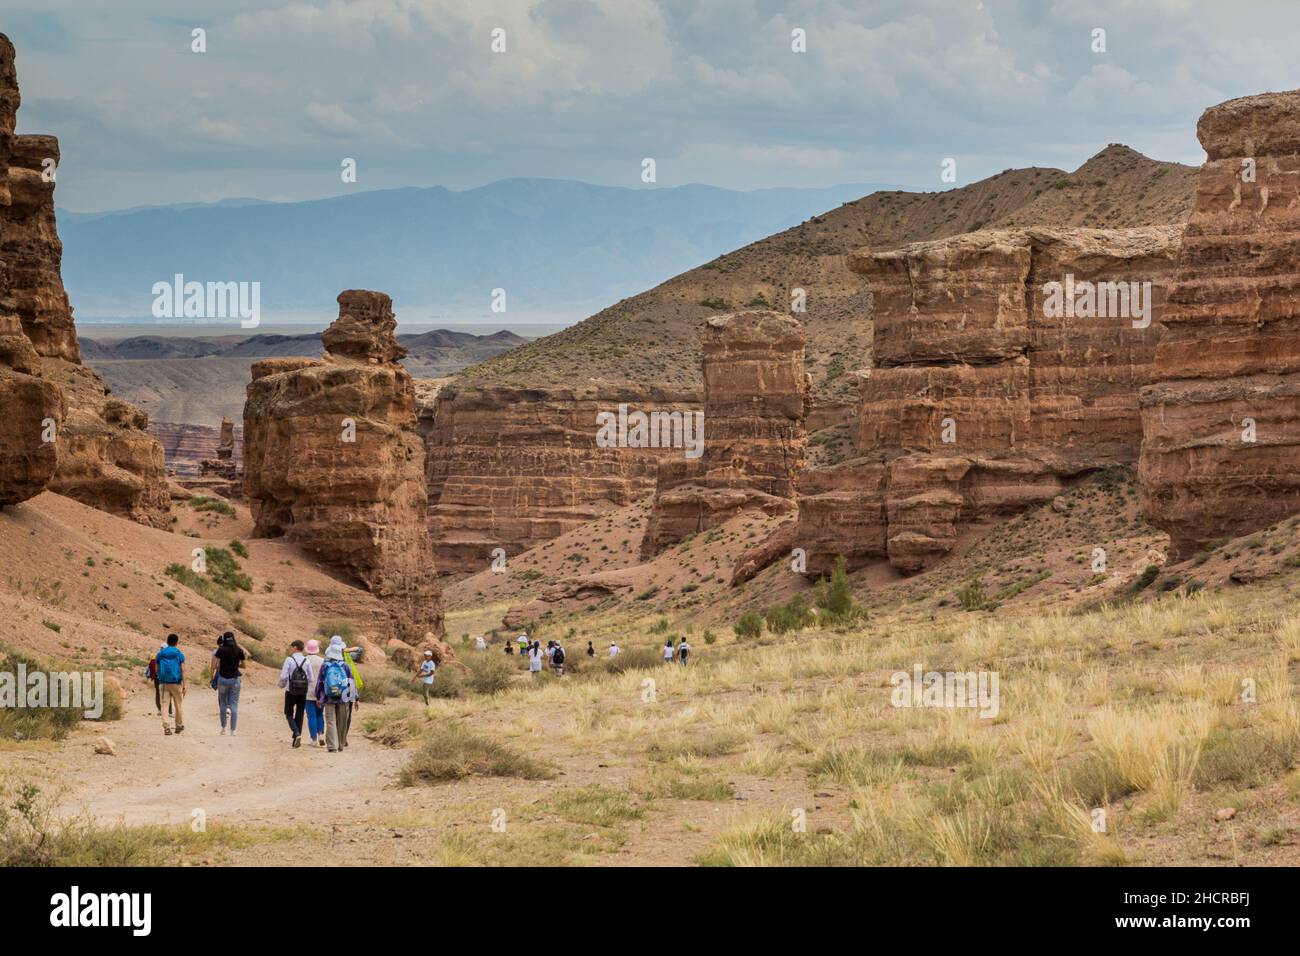 SHARYN, KAZAKHSTAN - JULY 28, 2018: Tourists visit Sharyn canyon in Kazakhstan Stock Photo